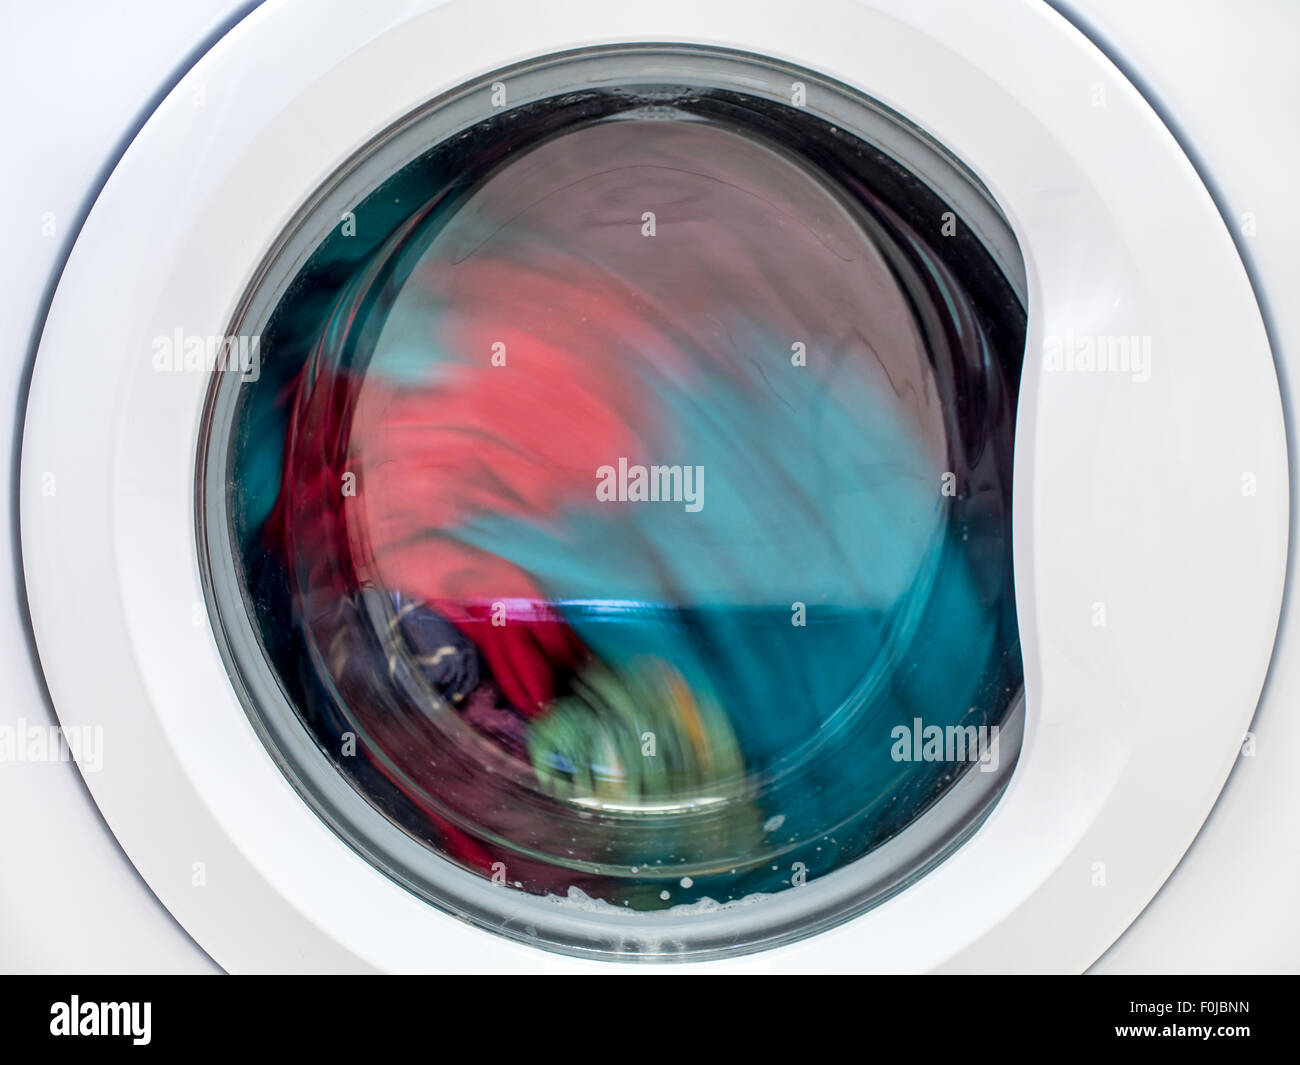 Closeup of washing machine door with spinning laundry Stock Photo